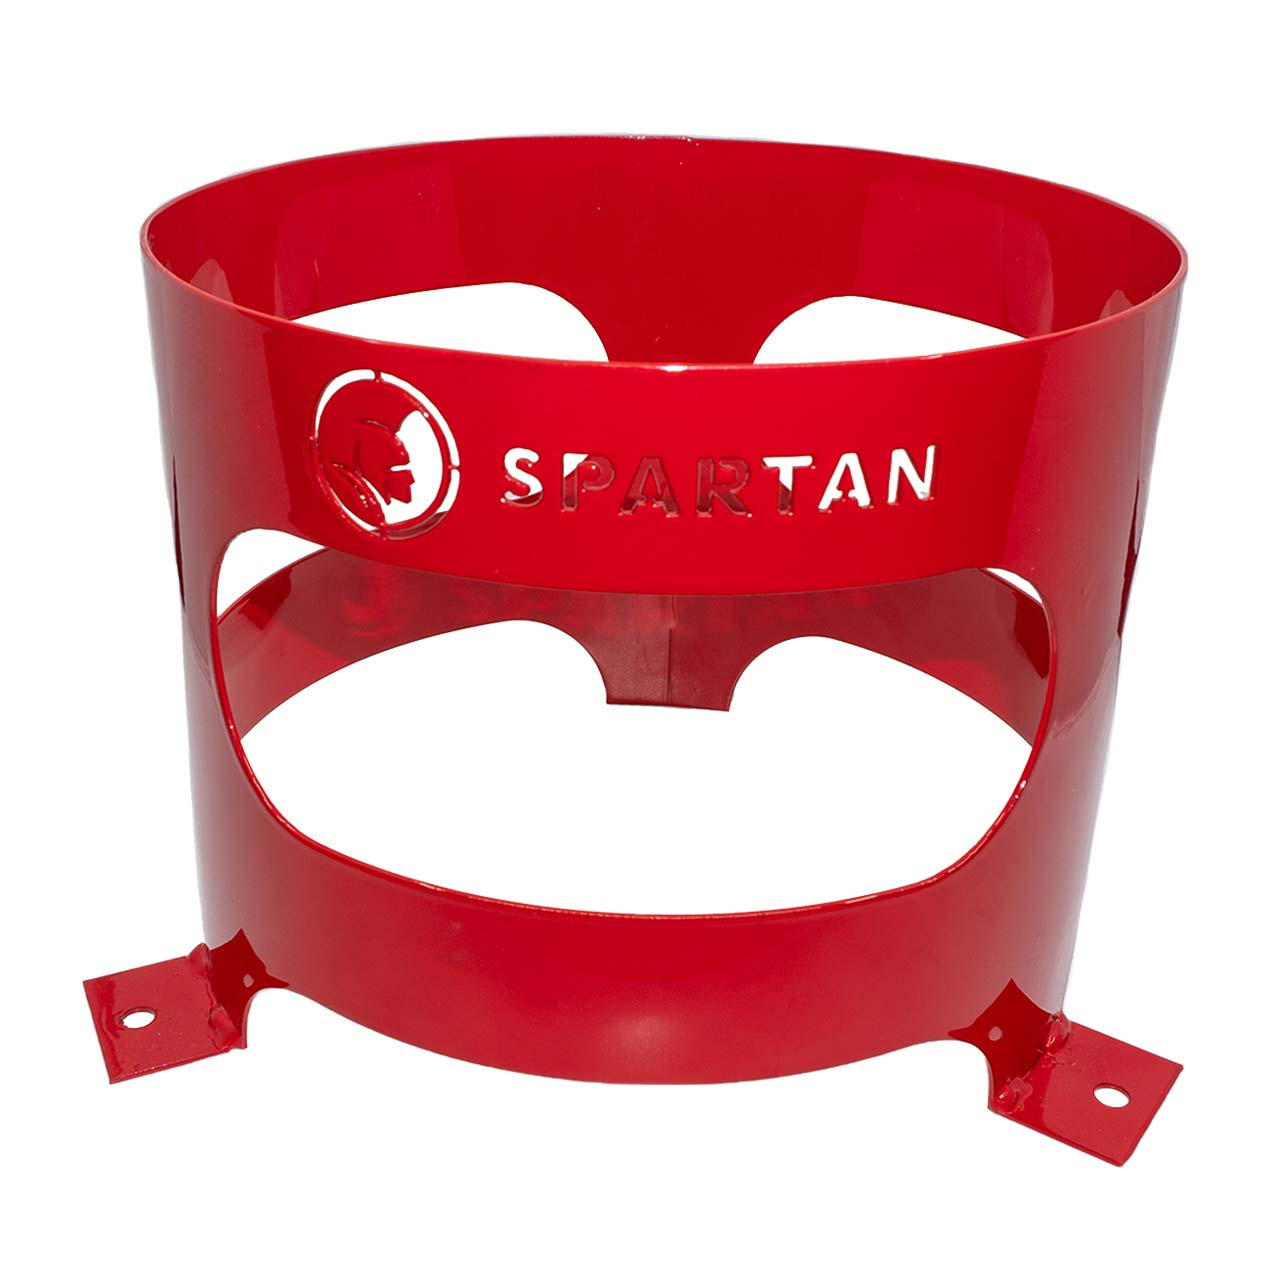 Spartan Tool Holder, 5 Gal Bucket - 71800440